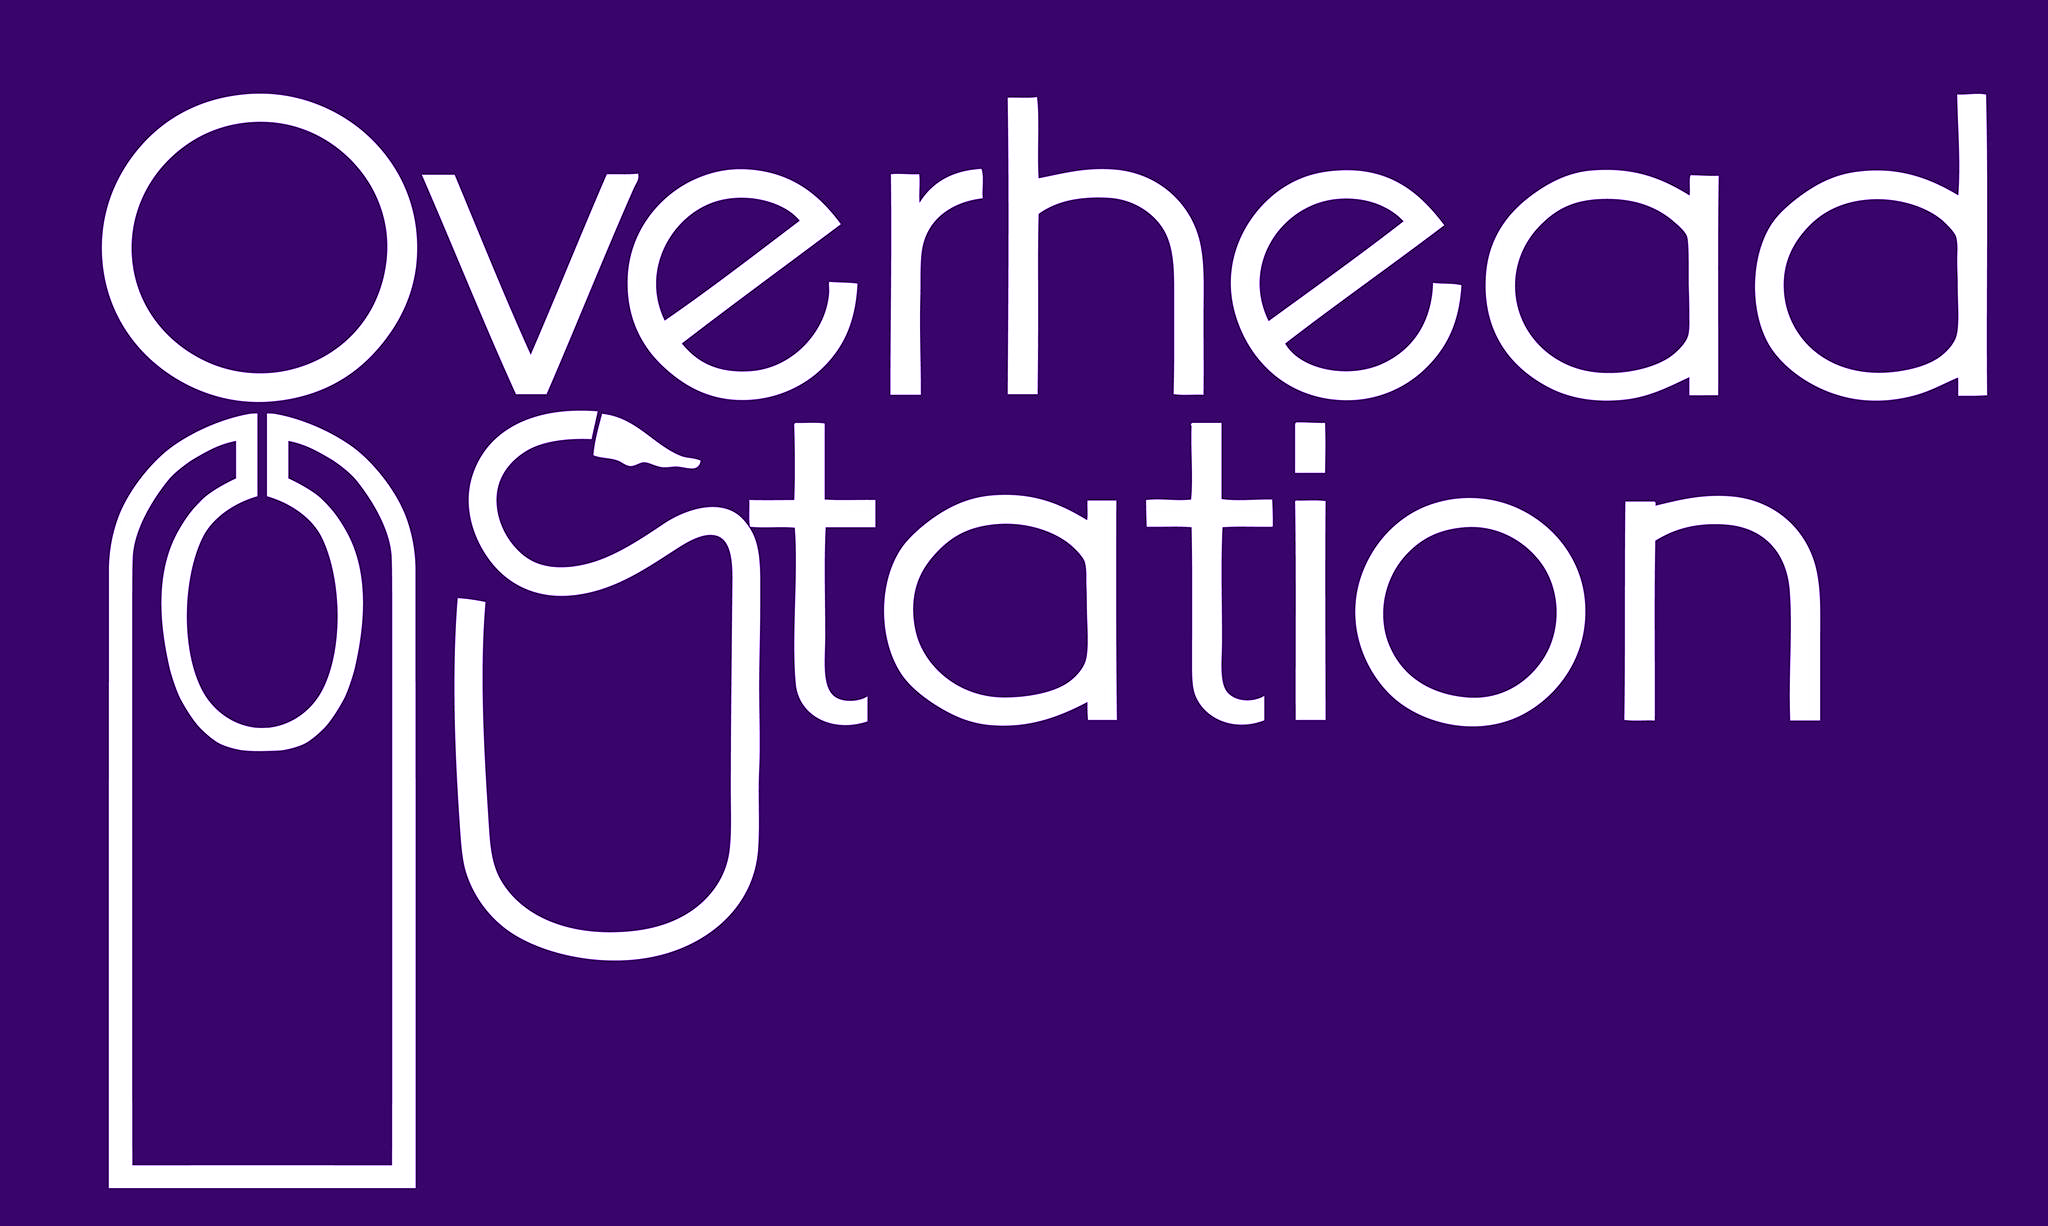 overhead station1